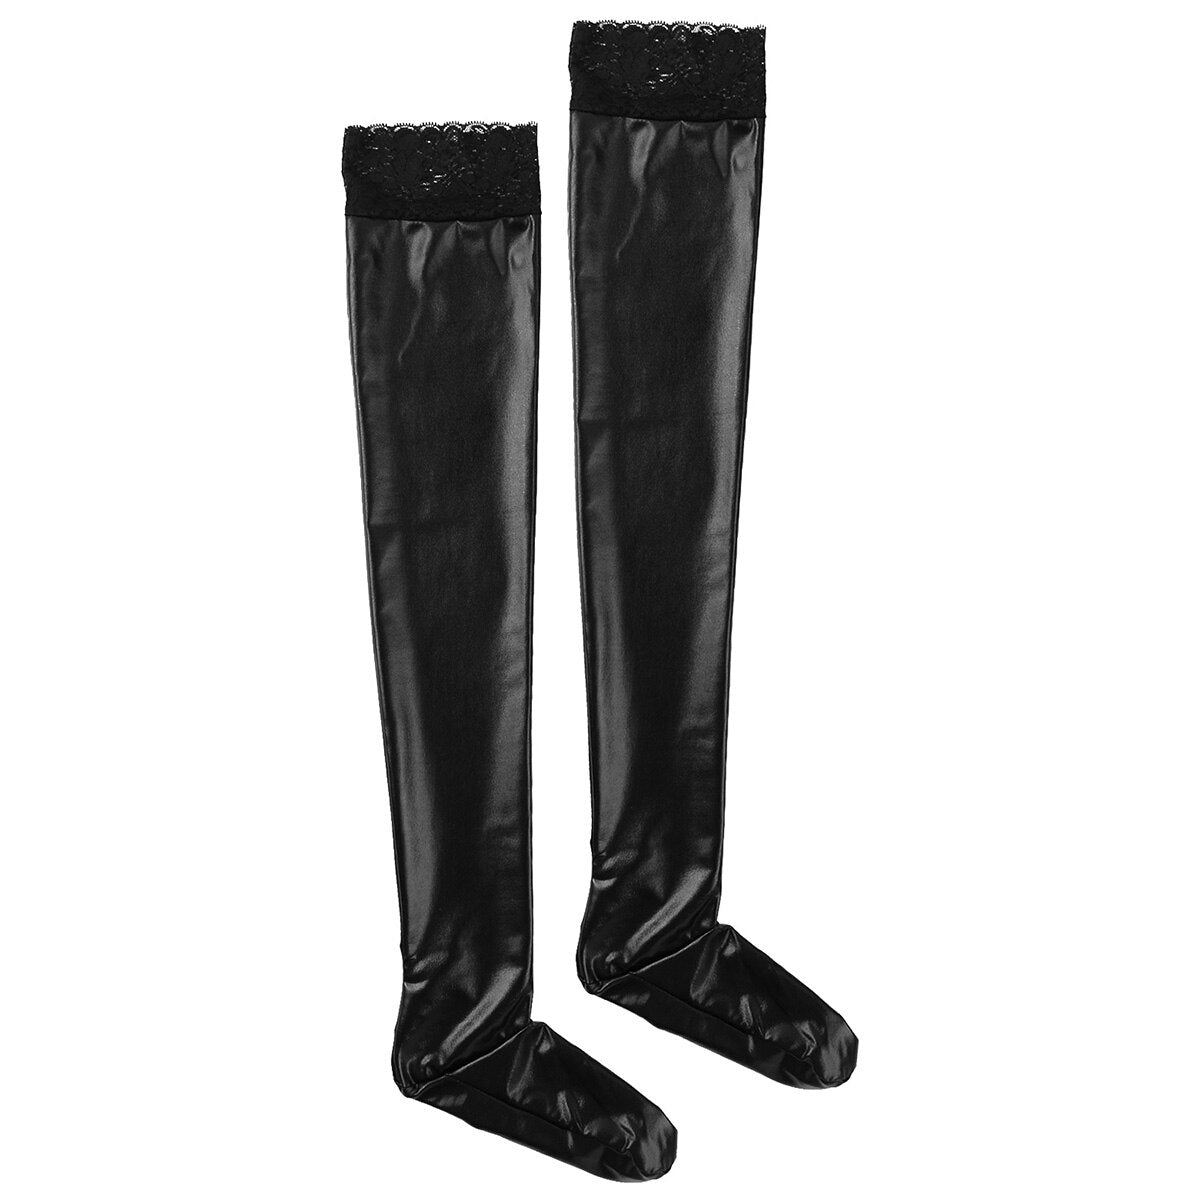 Rags n Rituals PU wet look latex high leg long socks, stockings at $14.99 USD